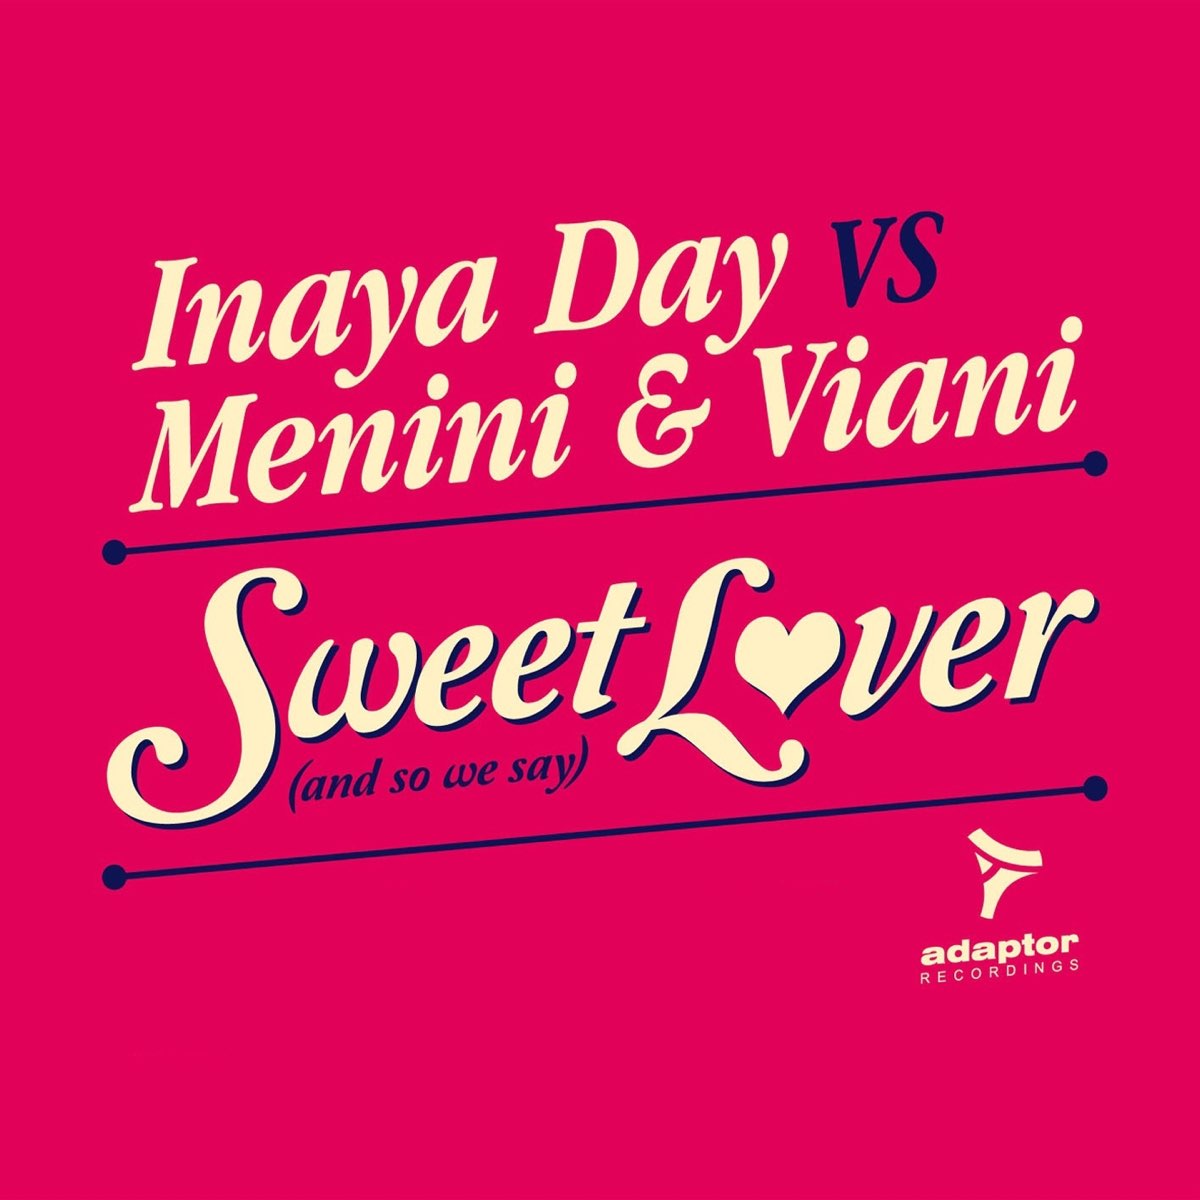 Sweet lover. Viani. Sweet lovers. Sweet House Love. Menini, Viani the Revolution Criminal Vibes Remix.